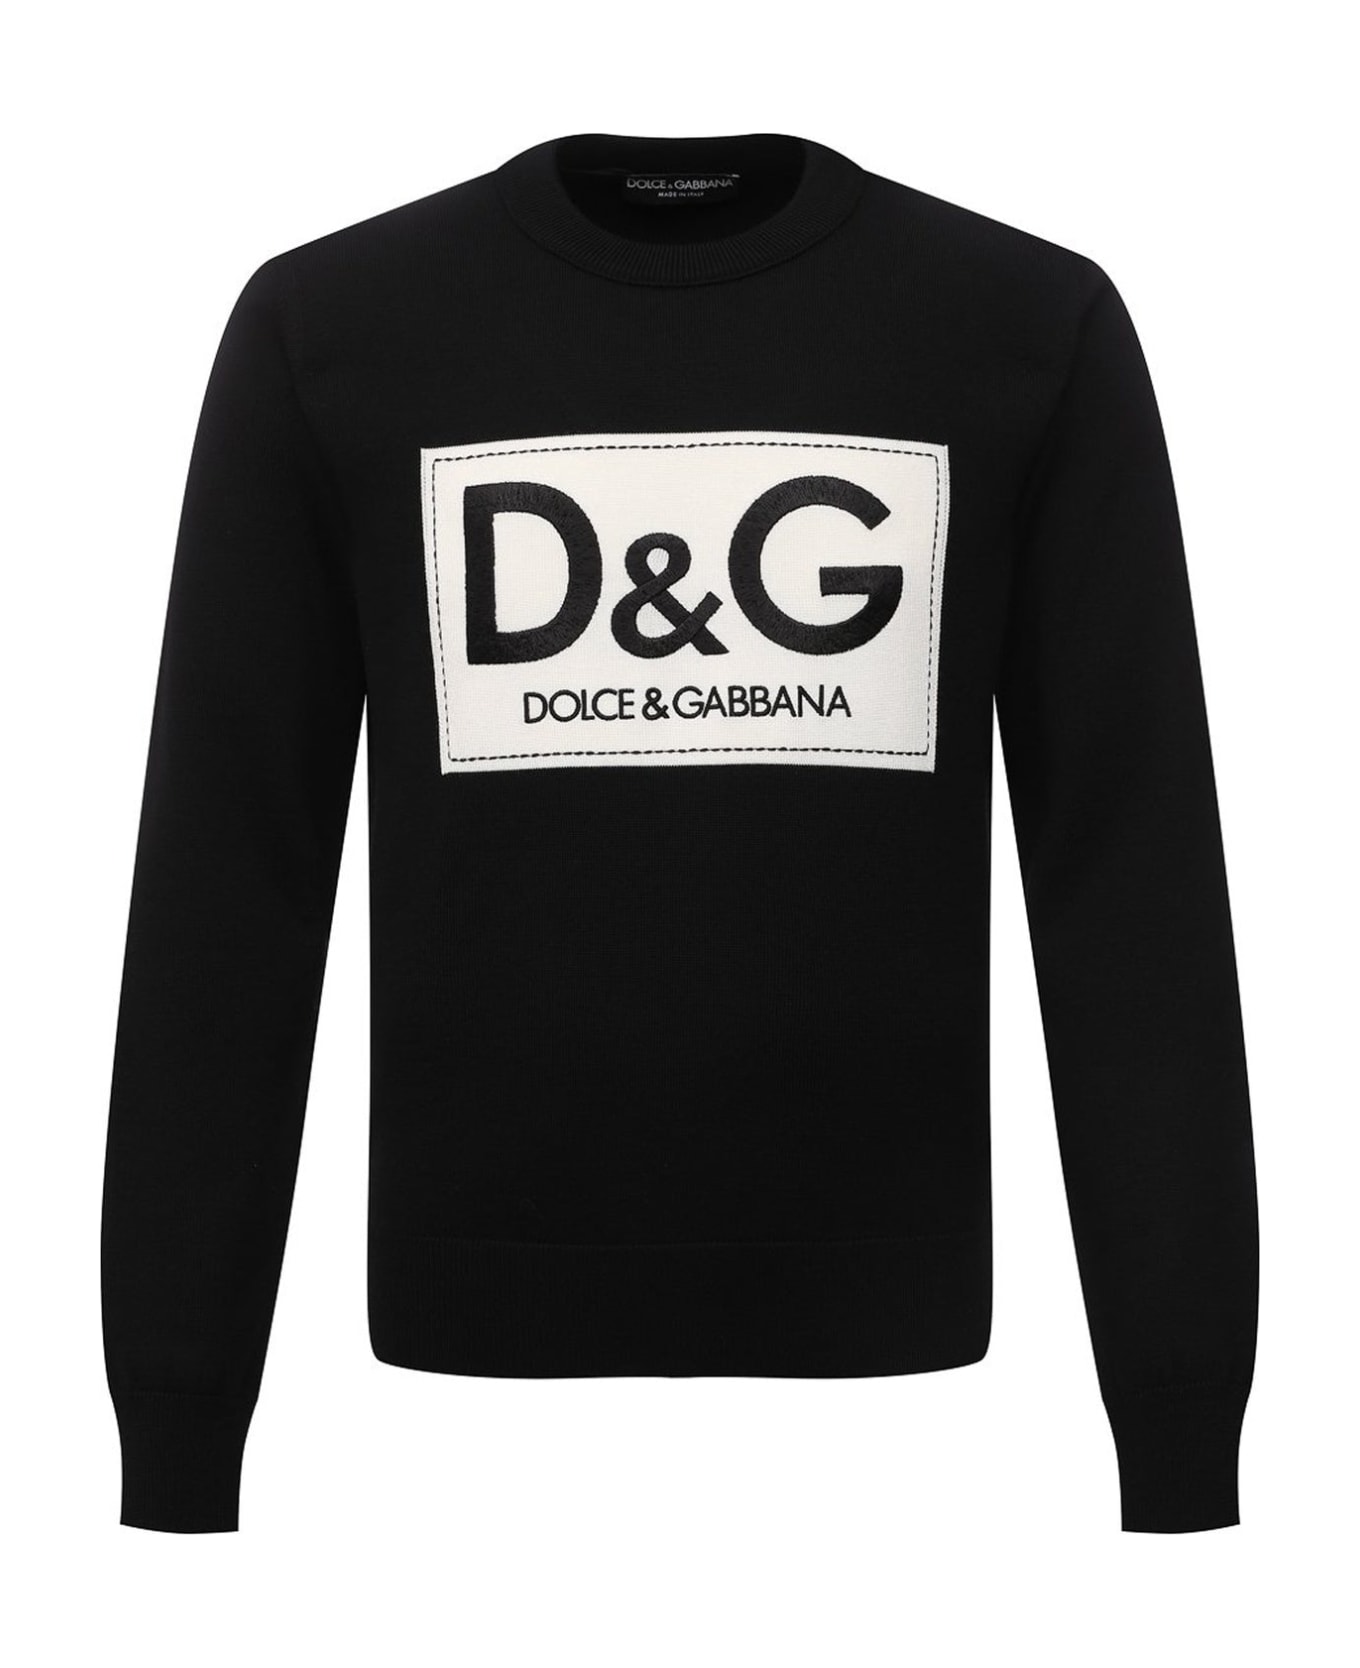 Dolce & Gabbana Dg Pullover - Black フリース